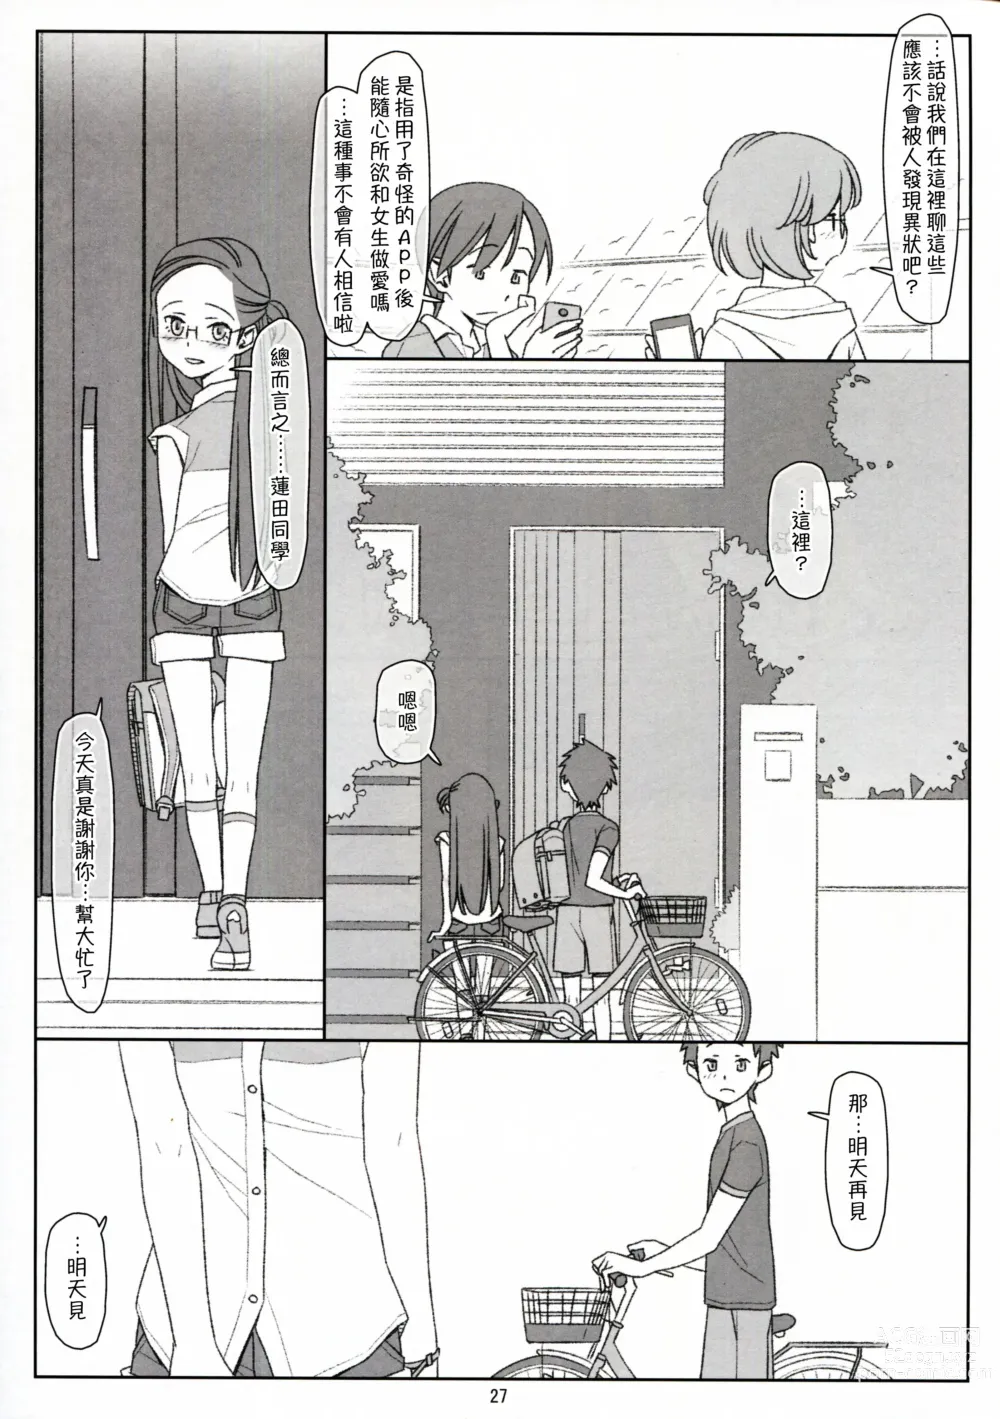 Page 53 of doujinshi Bokutachi no Super App + ②